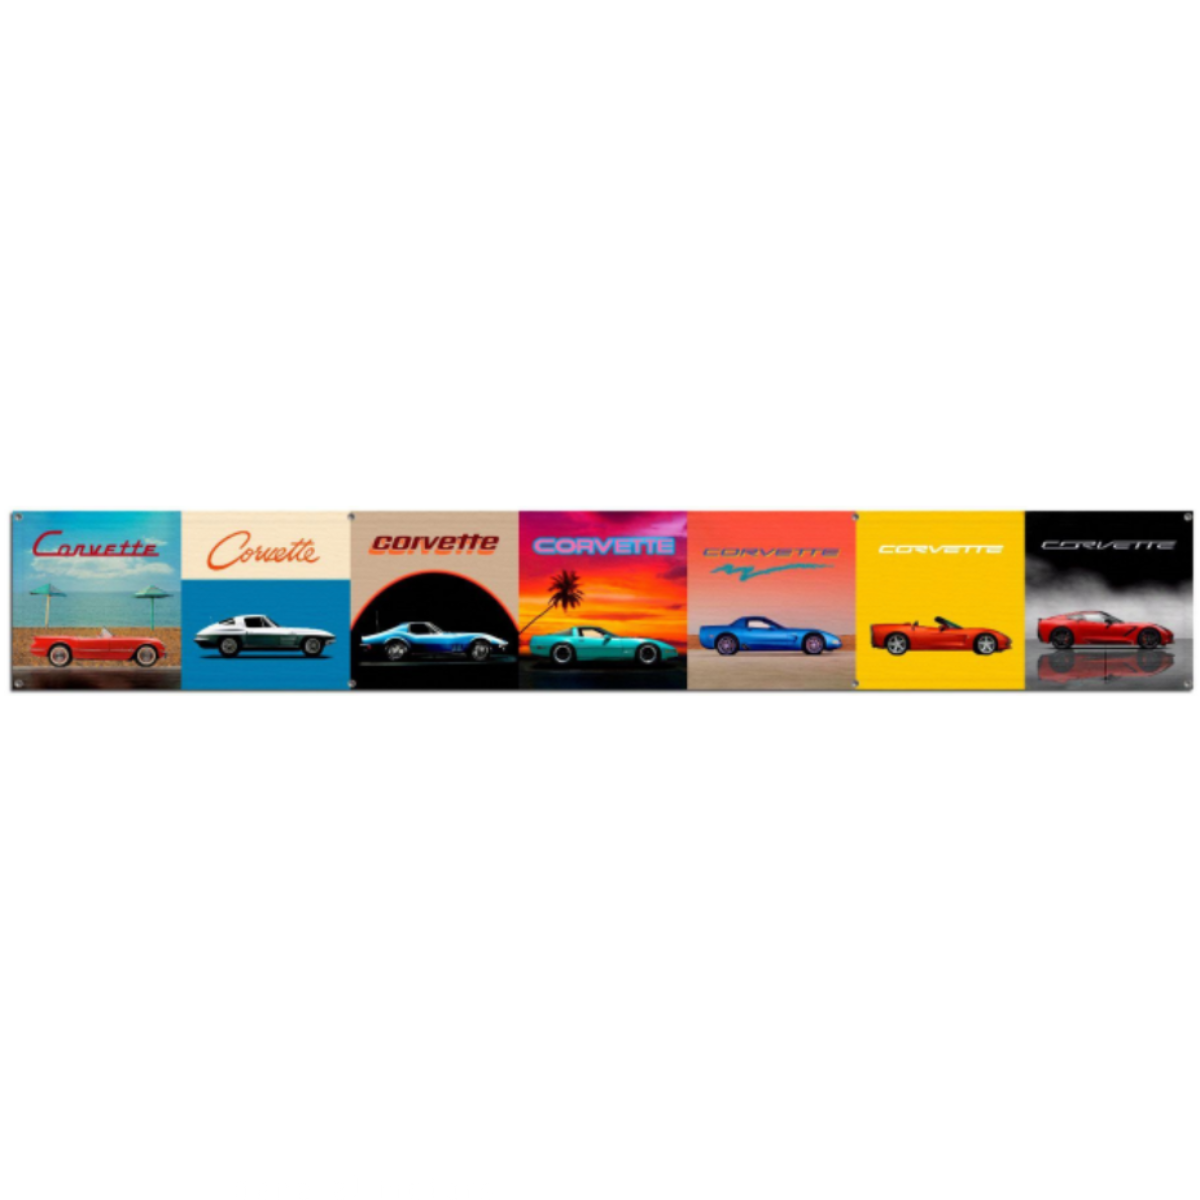 Corvette Decades Art Giant Garage Banner